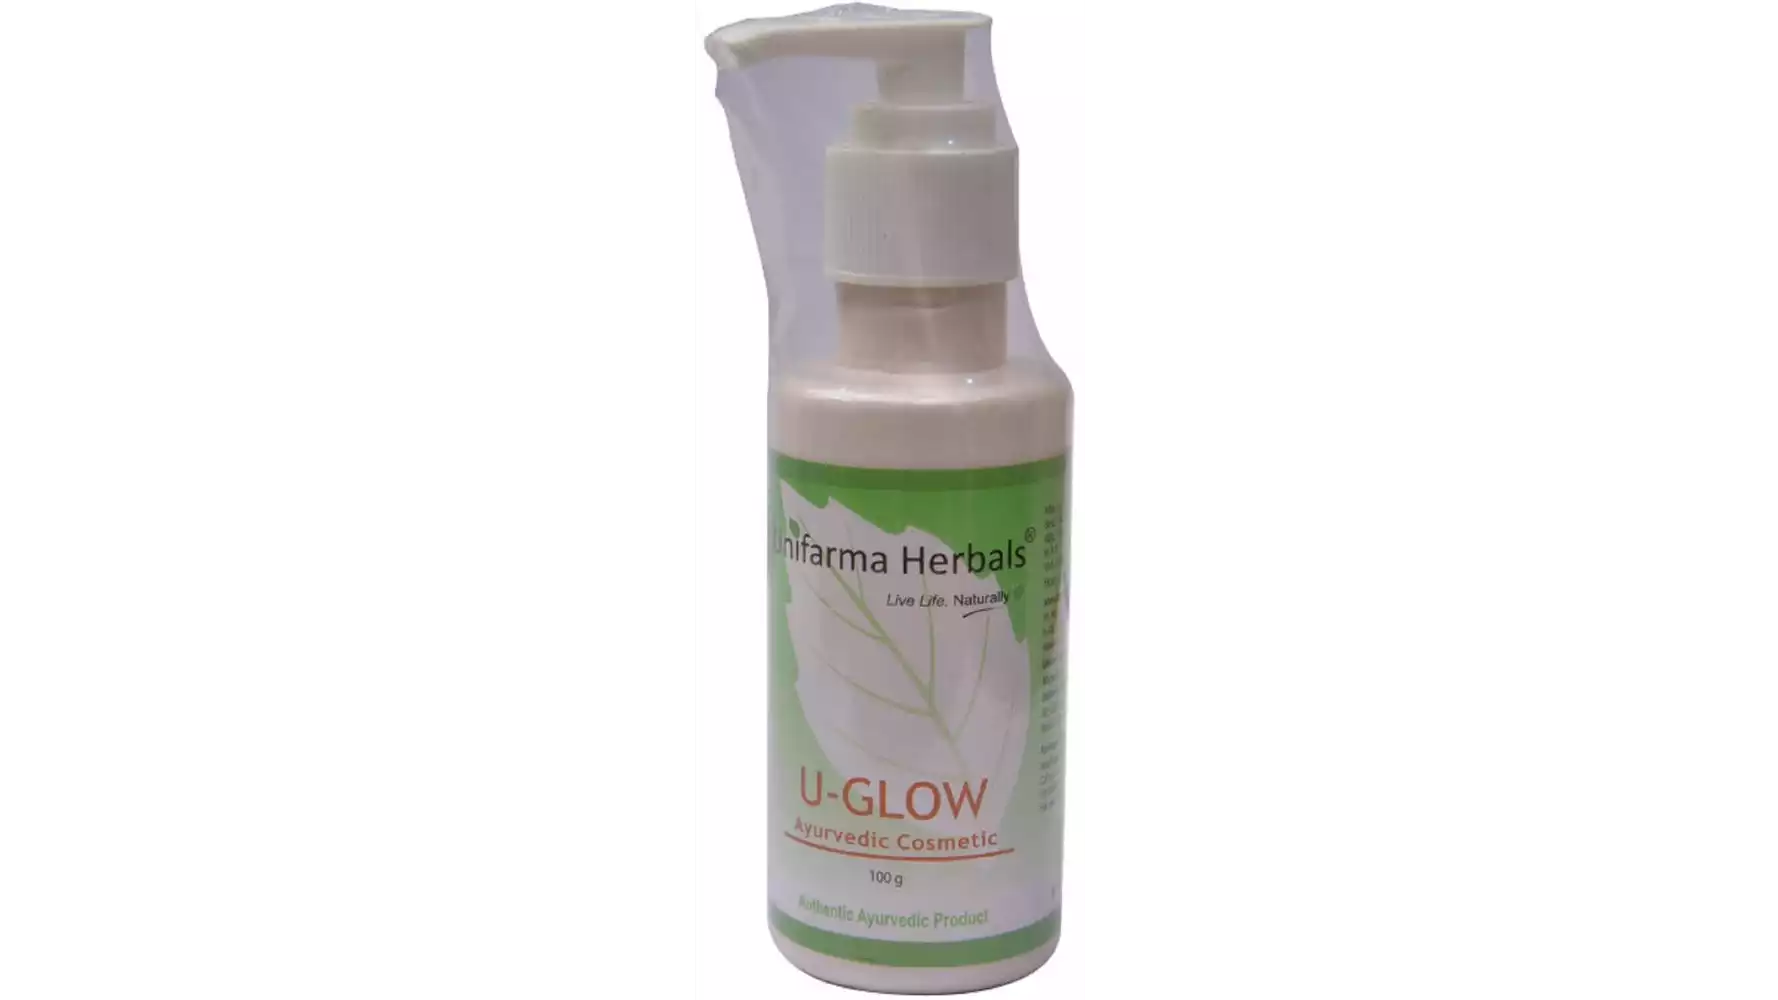 Unifarma Herbals U-Glow (100g)